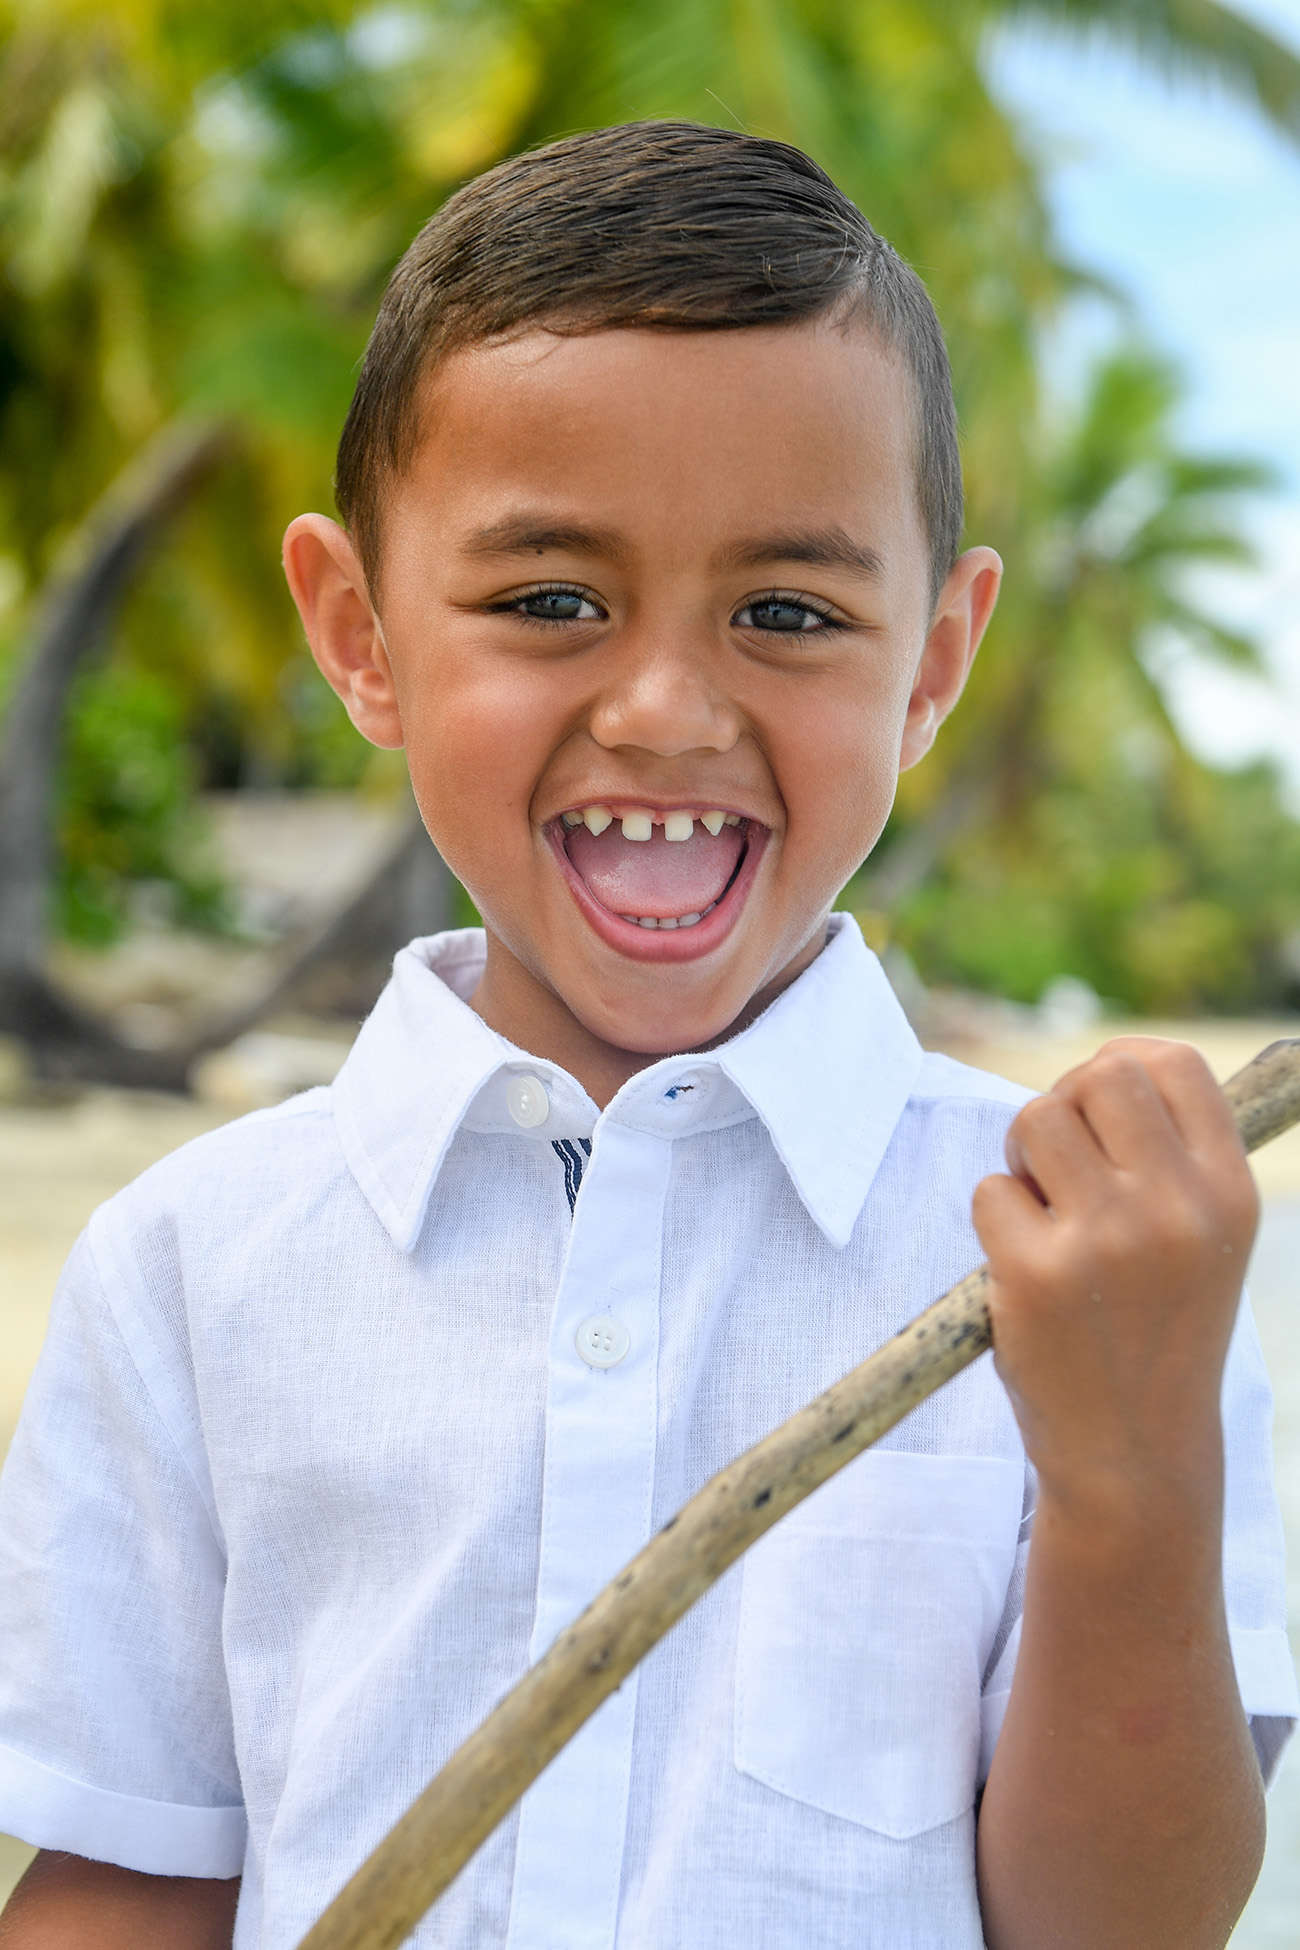 Cute Polynesian boy with milk teeth playing with a stick